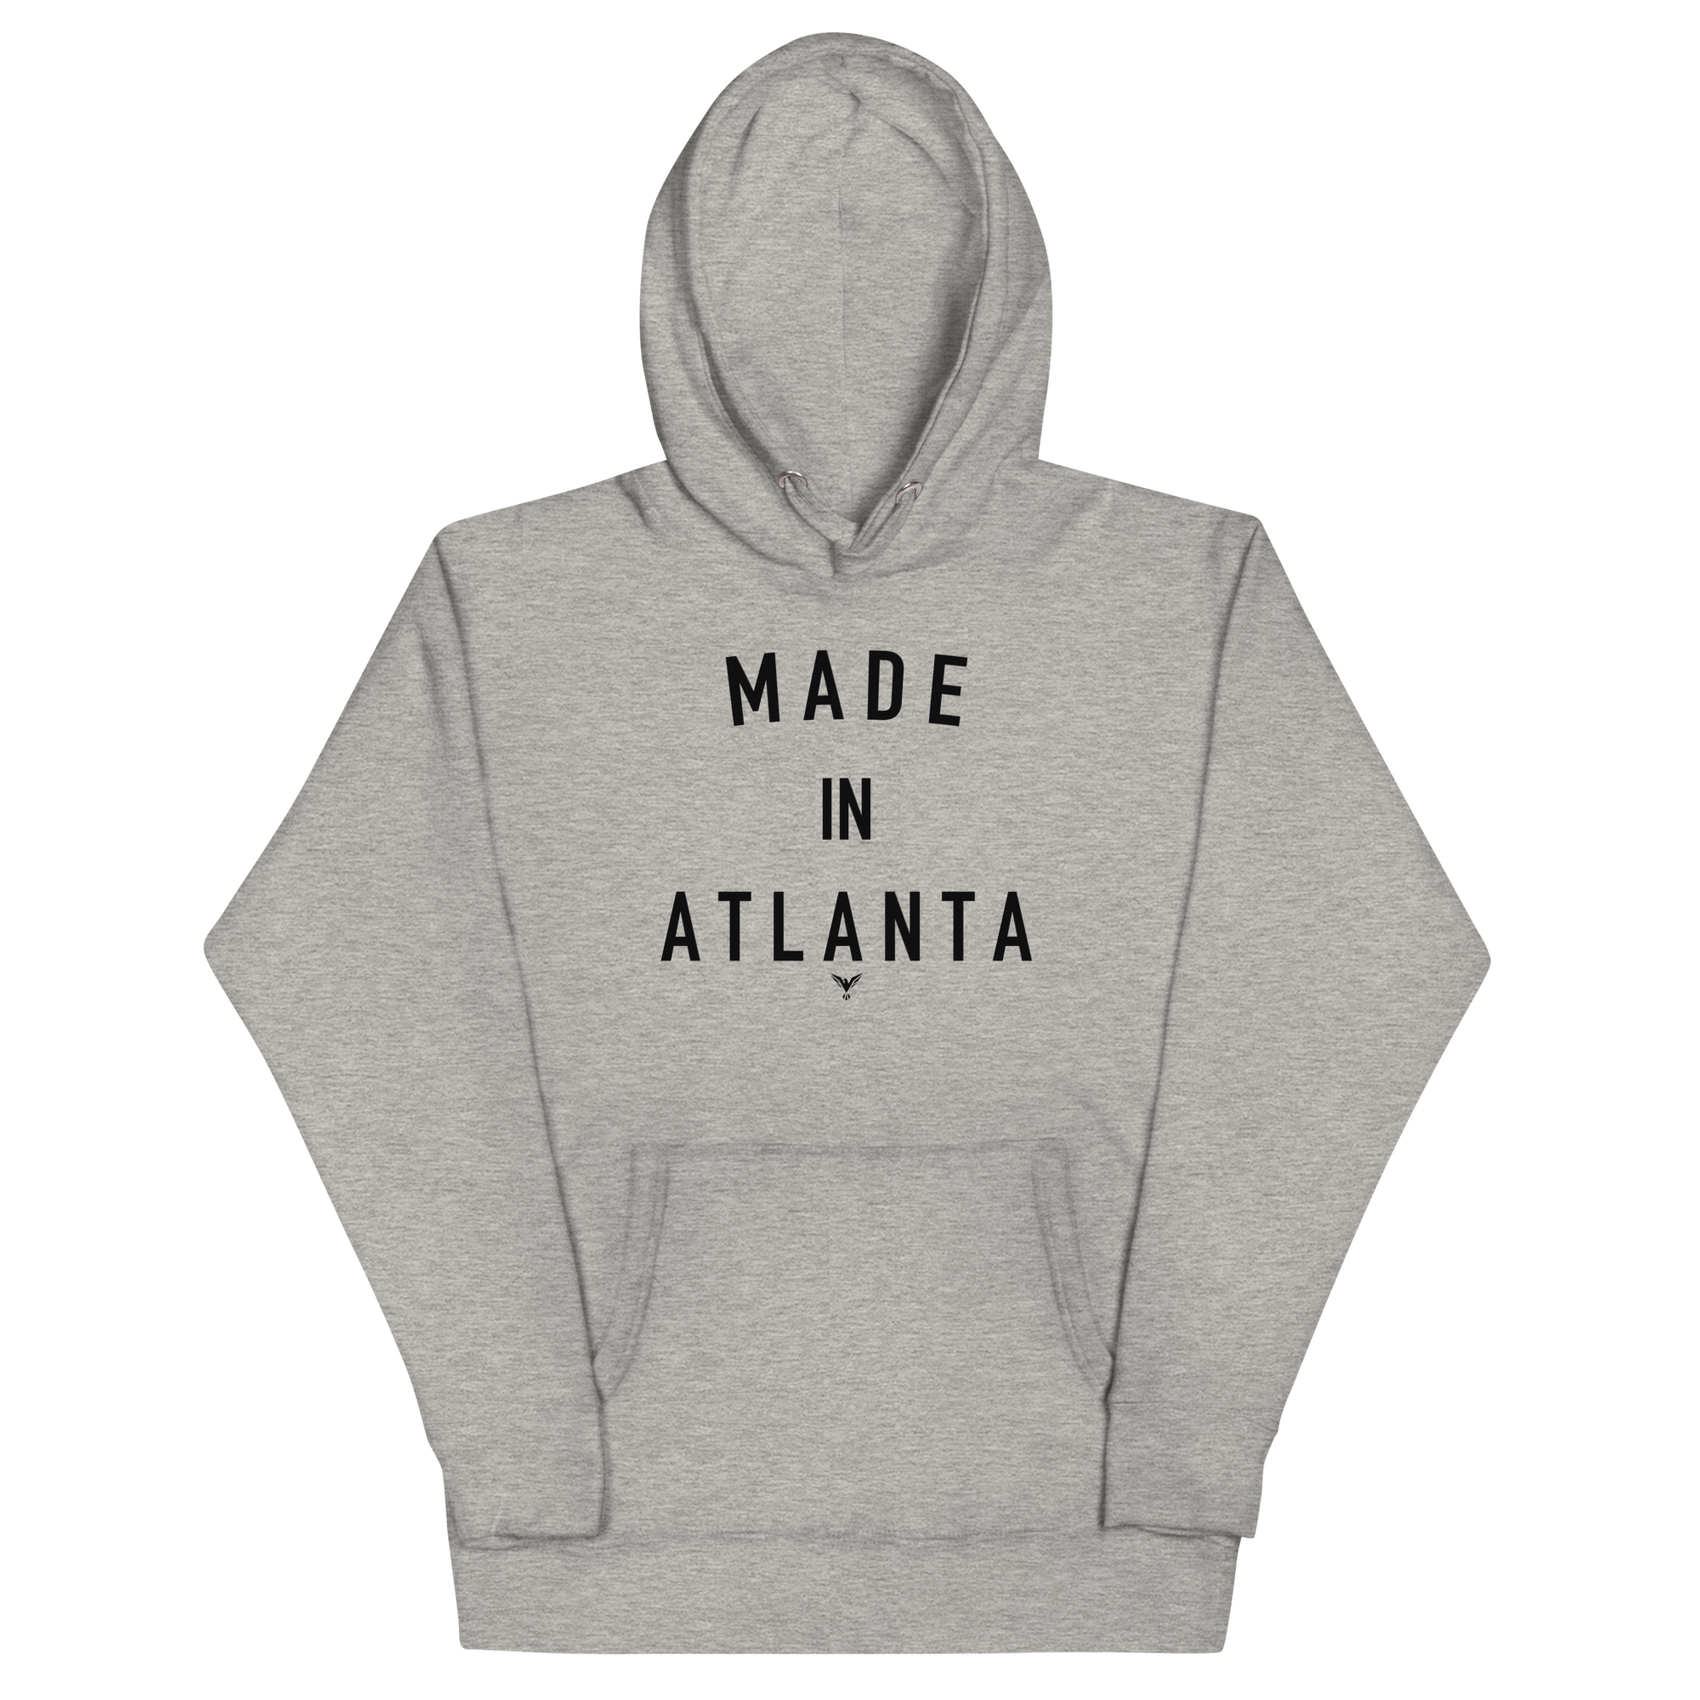 Made In Atlanta Hoodie(Gray)HoodieWin.Made